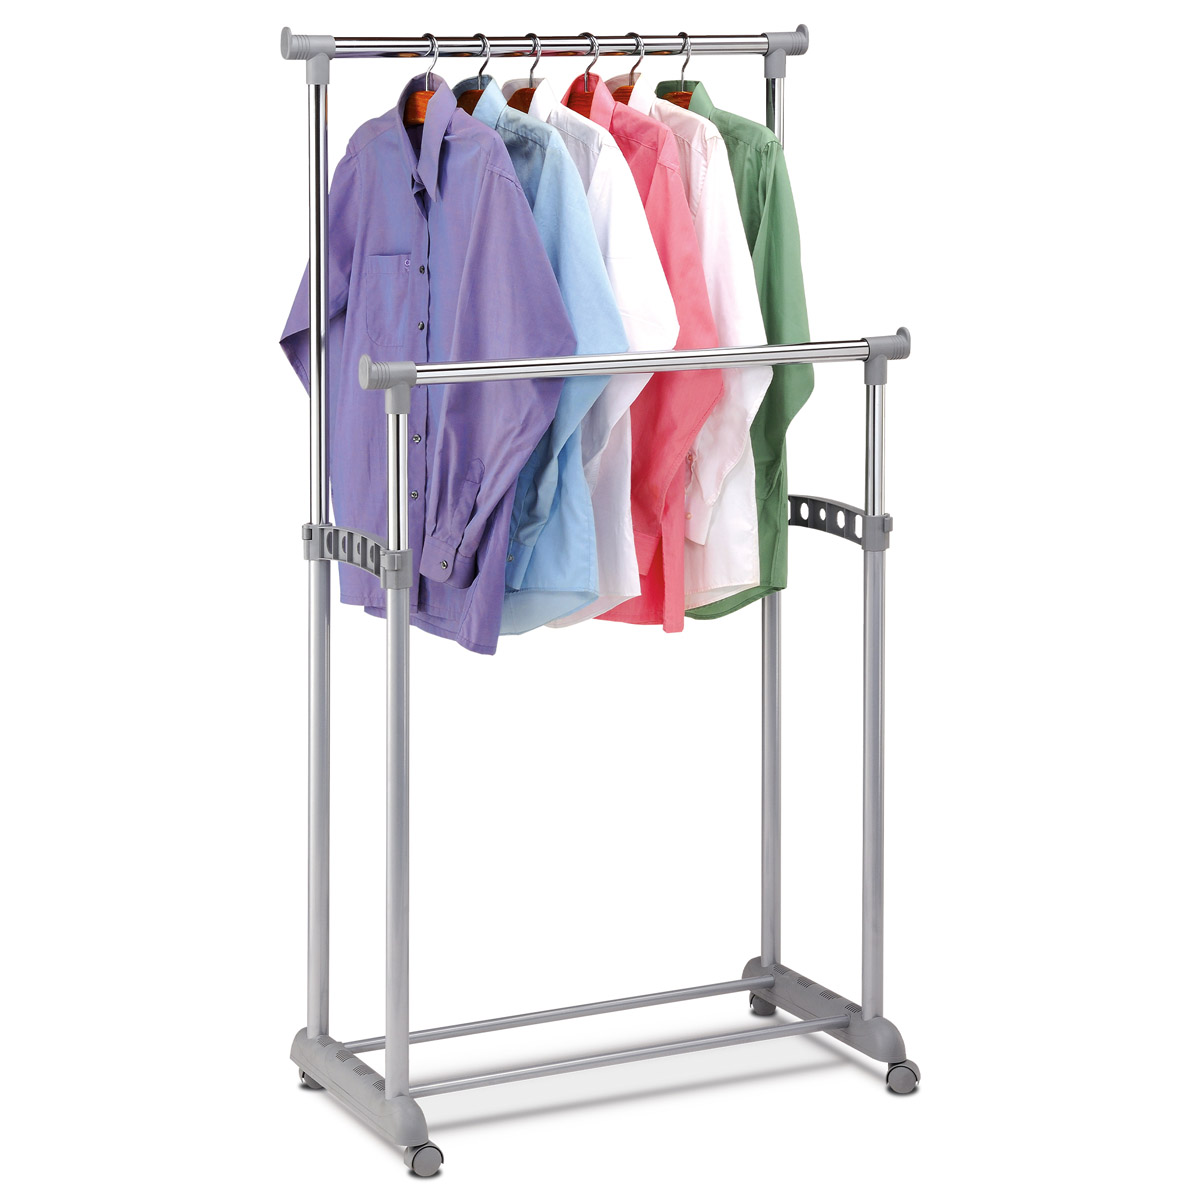 GREY single garment rack